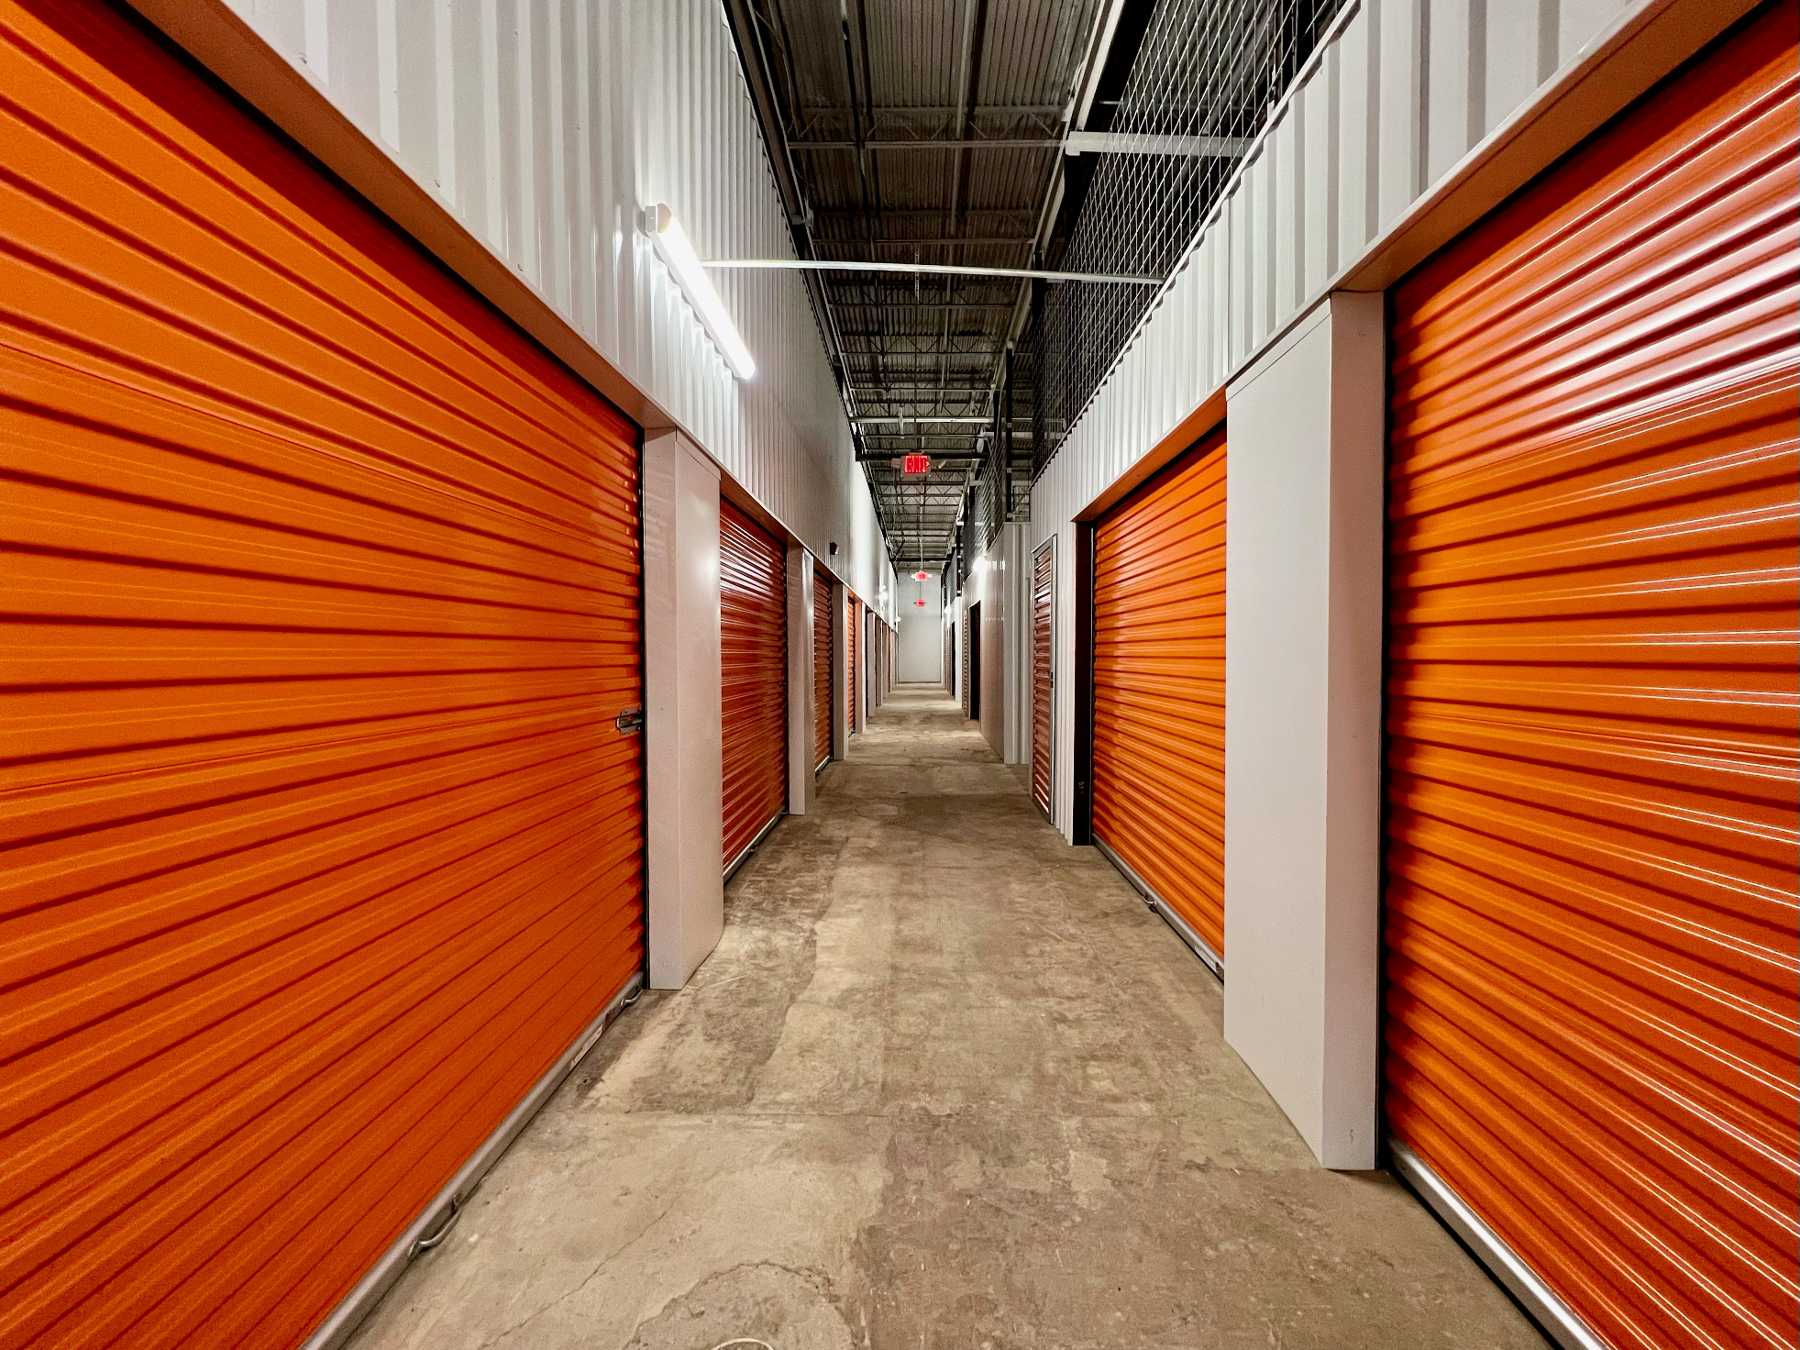 Corridor of storage units with orange doors.